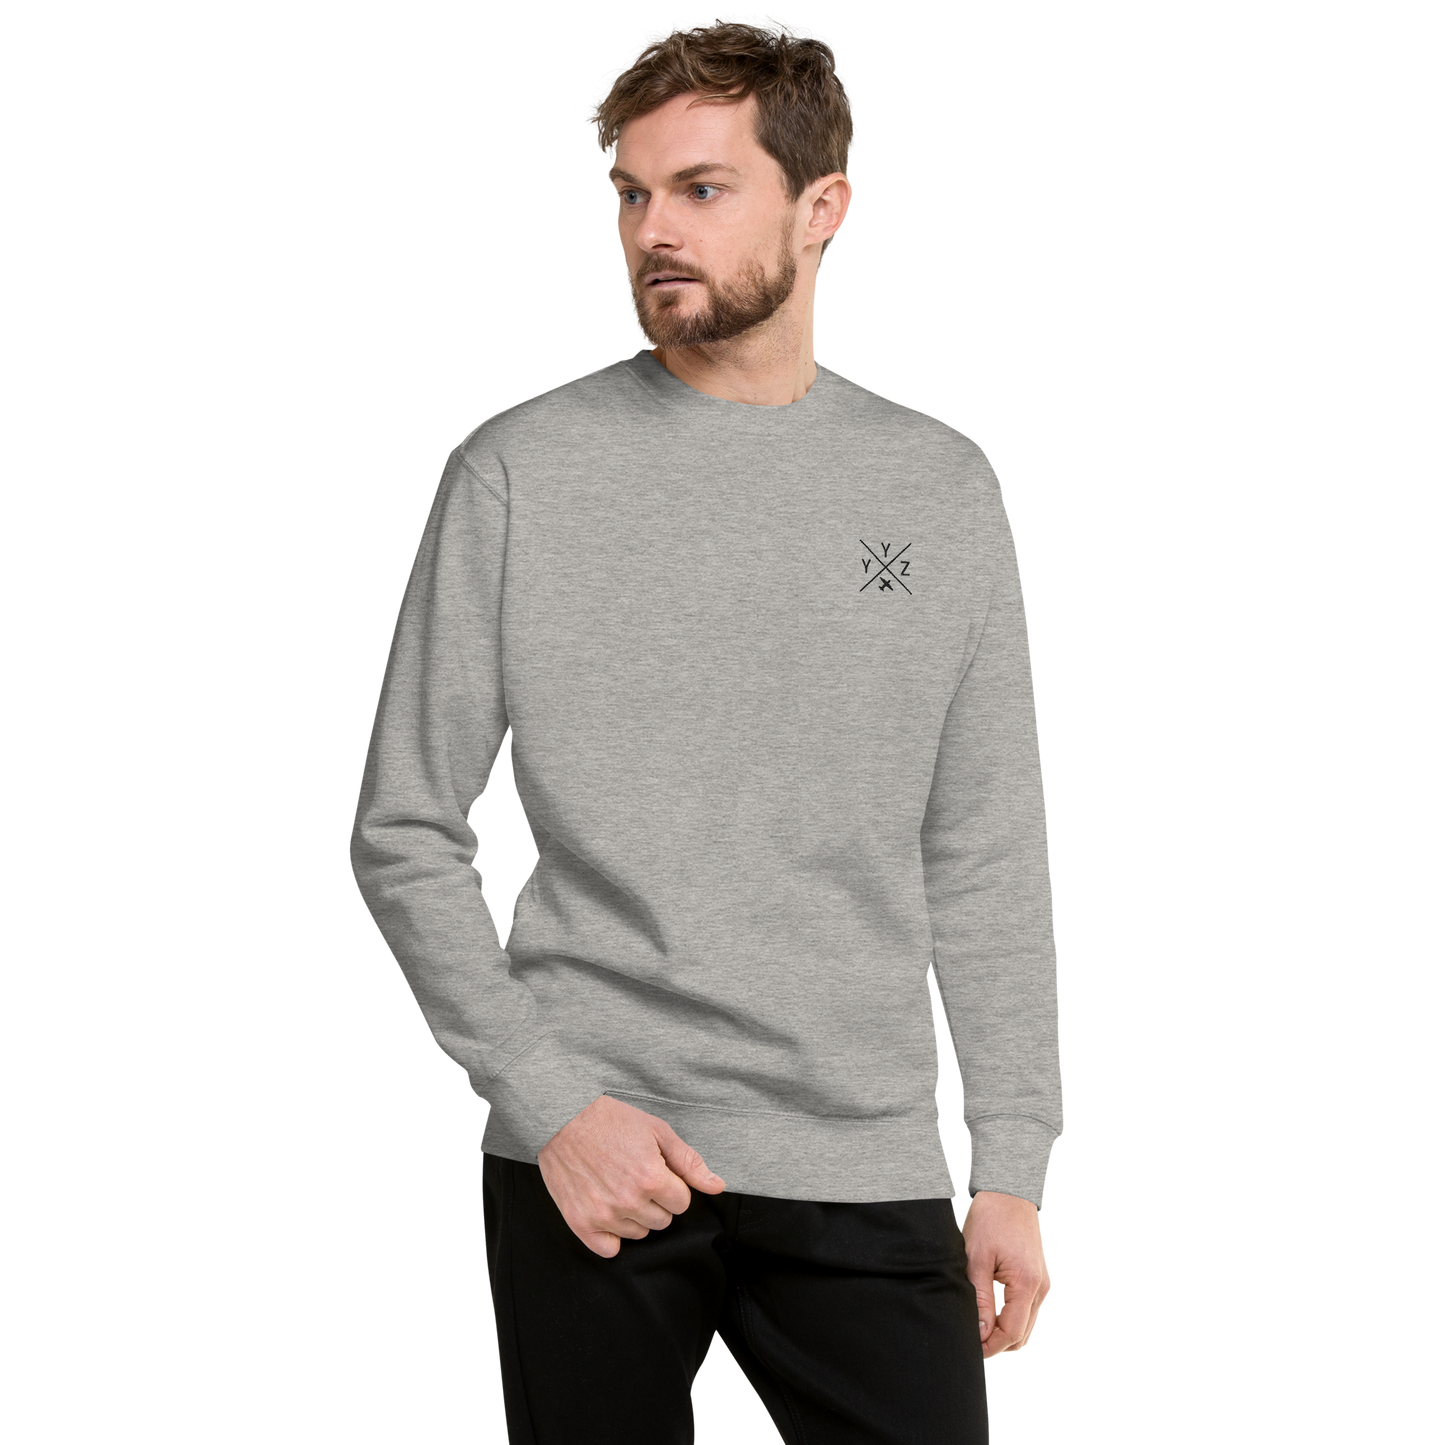 YHM Designs - YYZ Toronto Premium Sweatshirt - Crossed-X Design with Airport Code and Vintage Propliner - Black Embroidery - Image 01